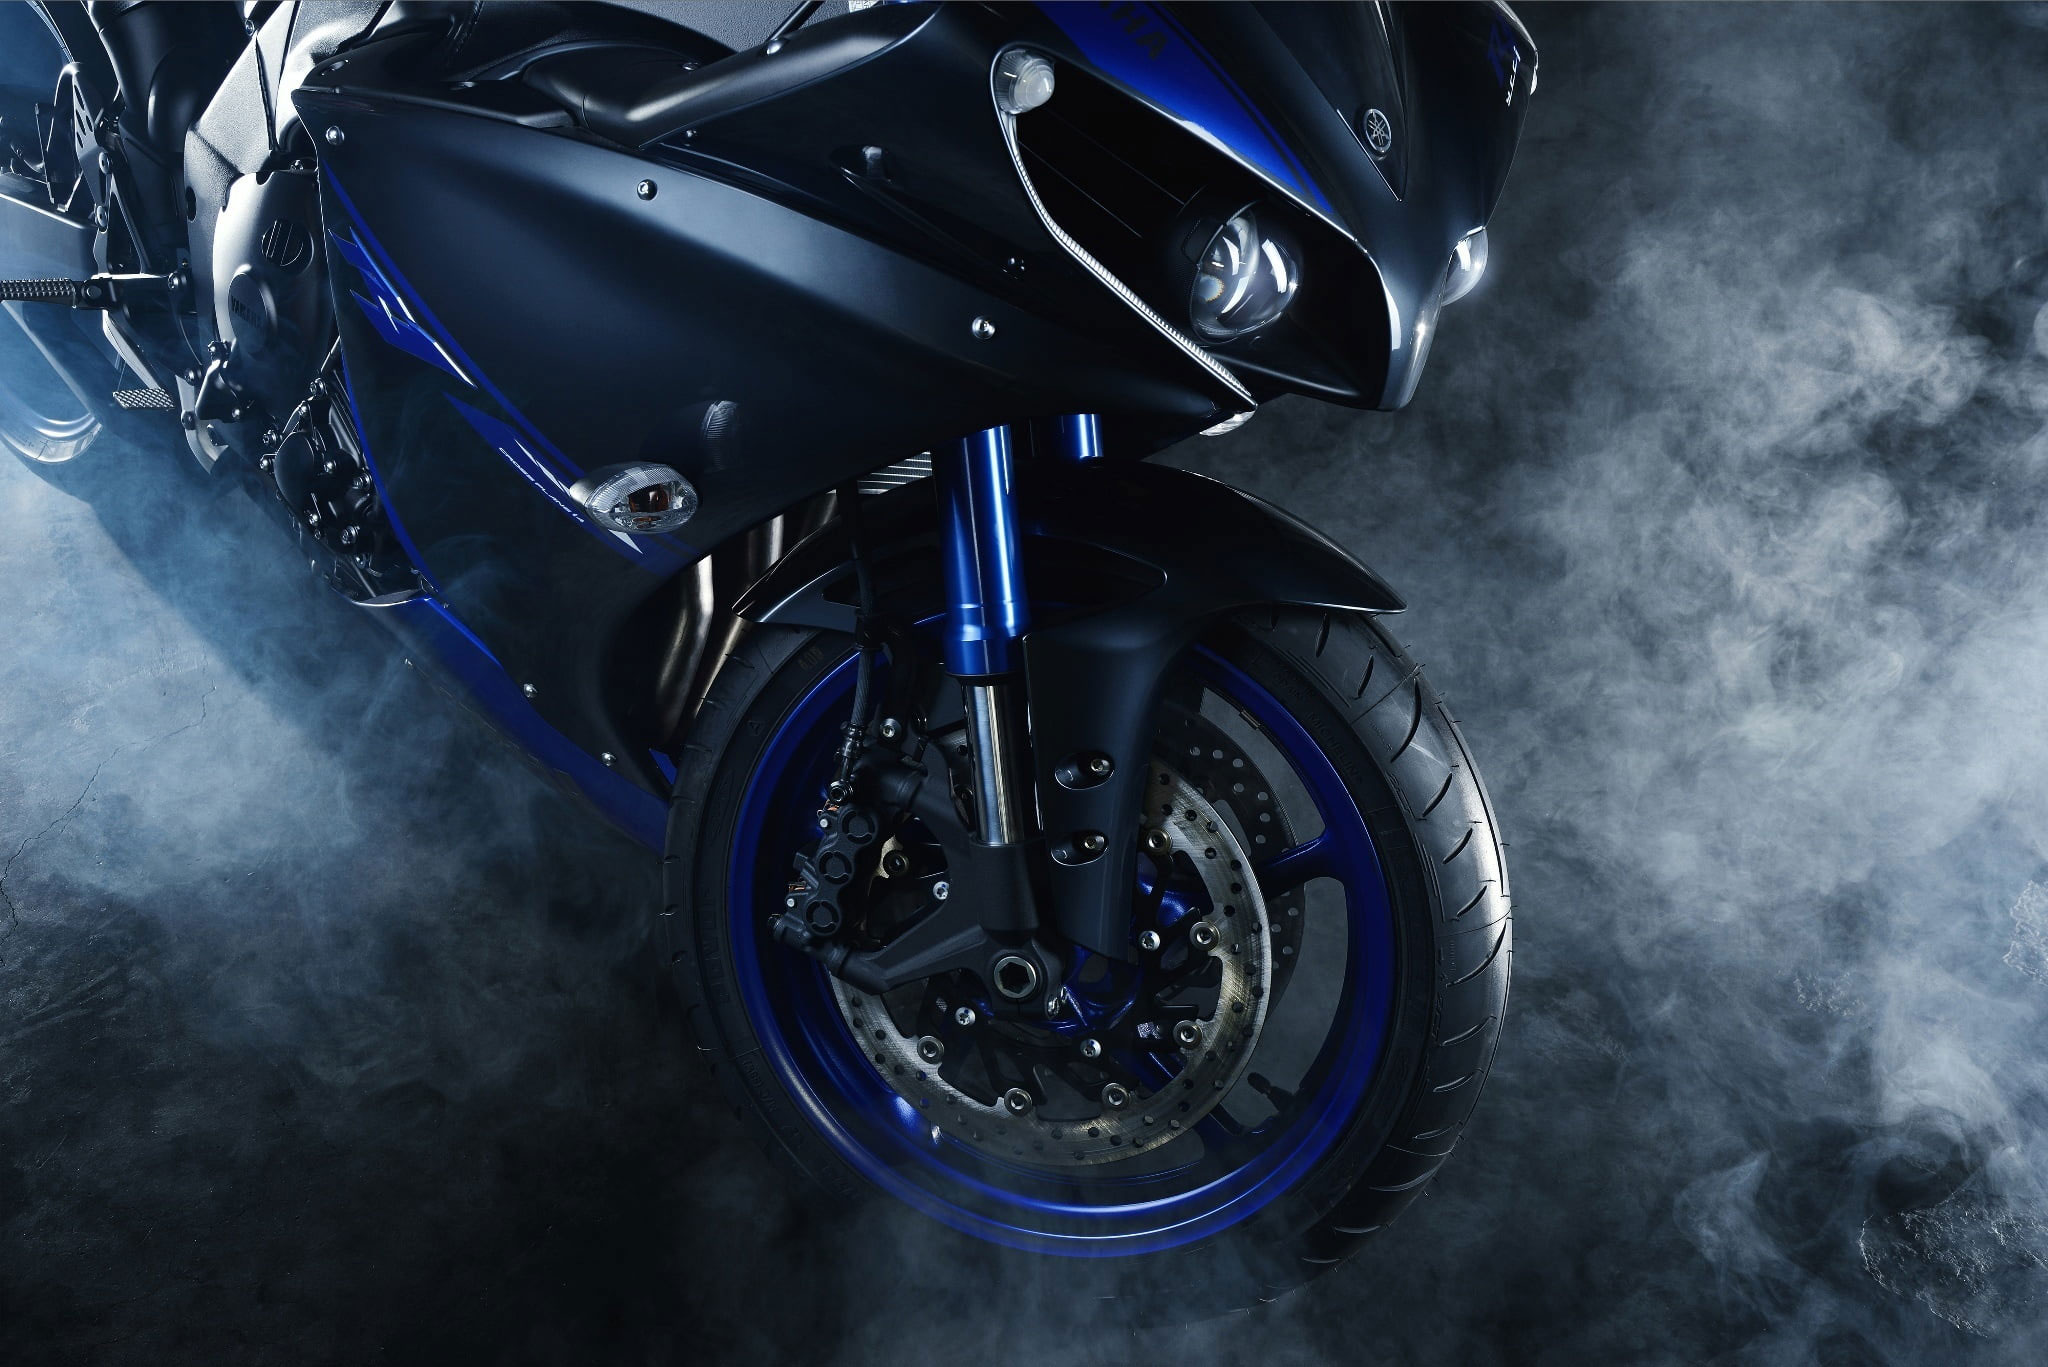 Black and blue sports bike wallpaper, motorcycle, motorbike, Yamaha YZF R1